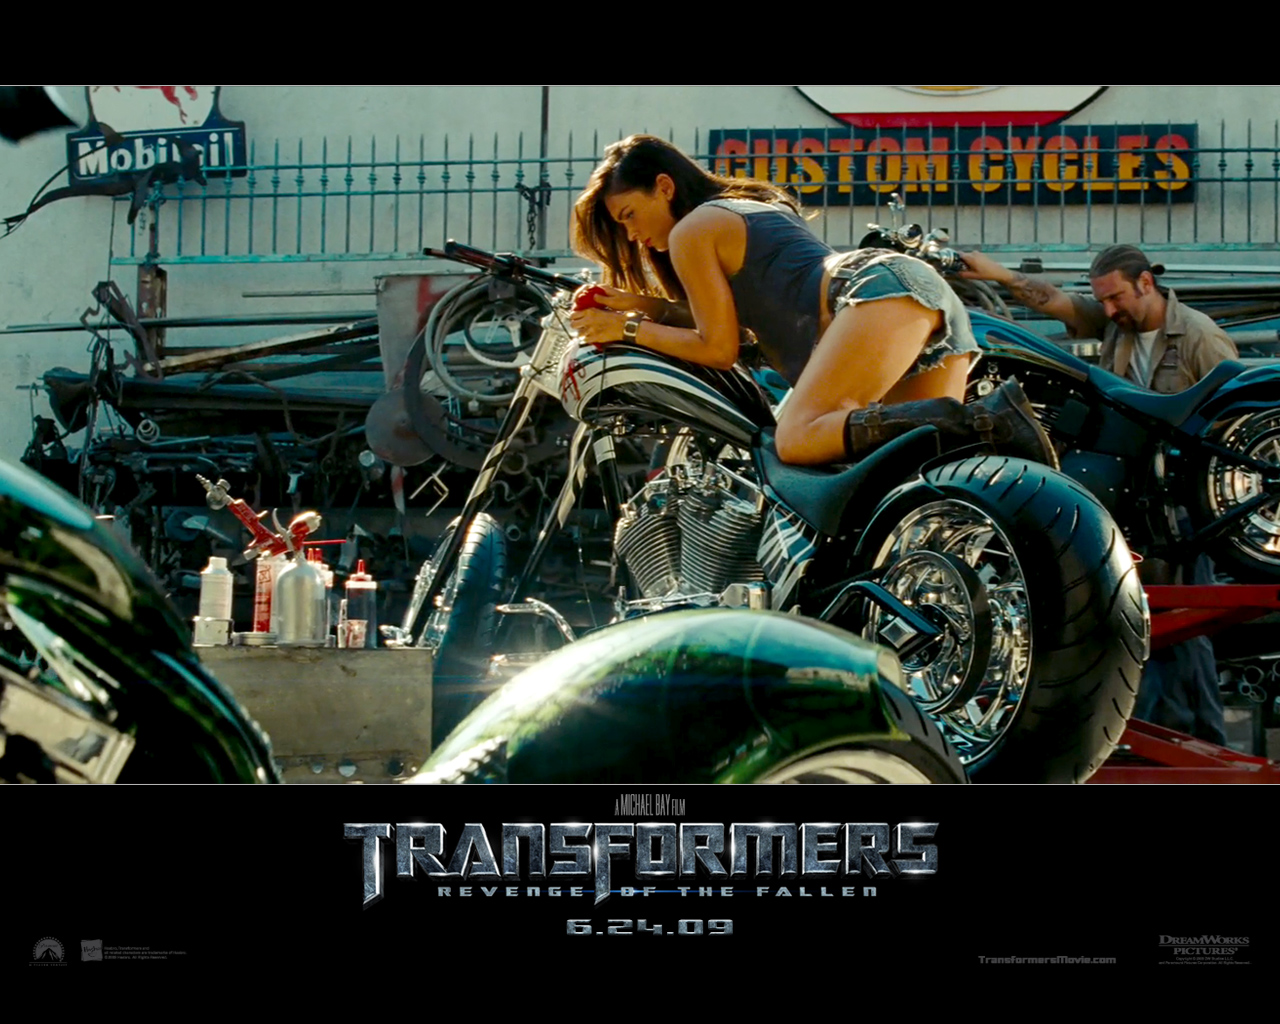 "Transformers: Revenge of the Fallen - Megan Fox as Mikaela Banes" desktop wallpaper number 2 (1280 x 1024 pixels)